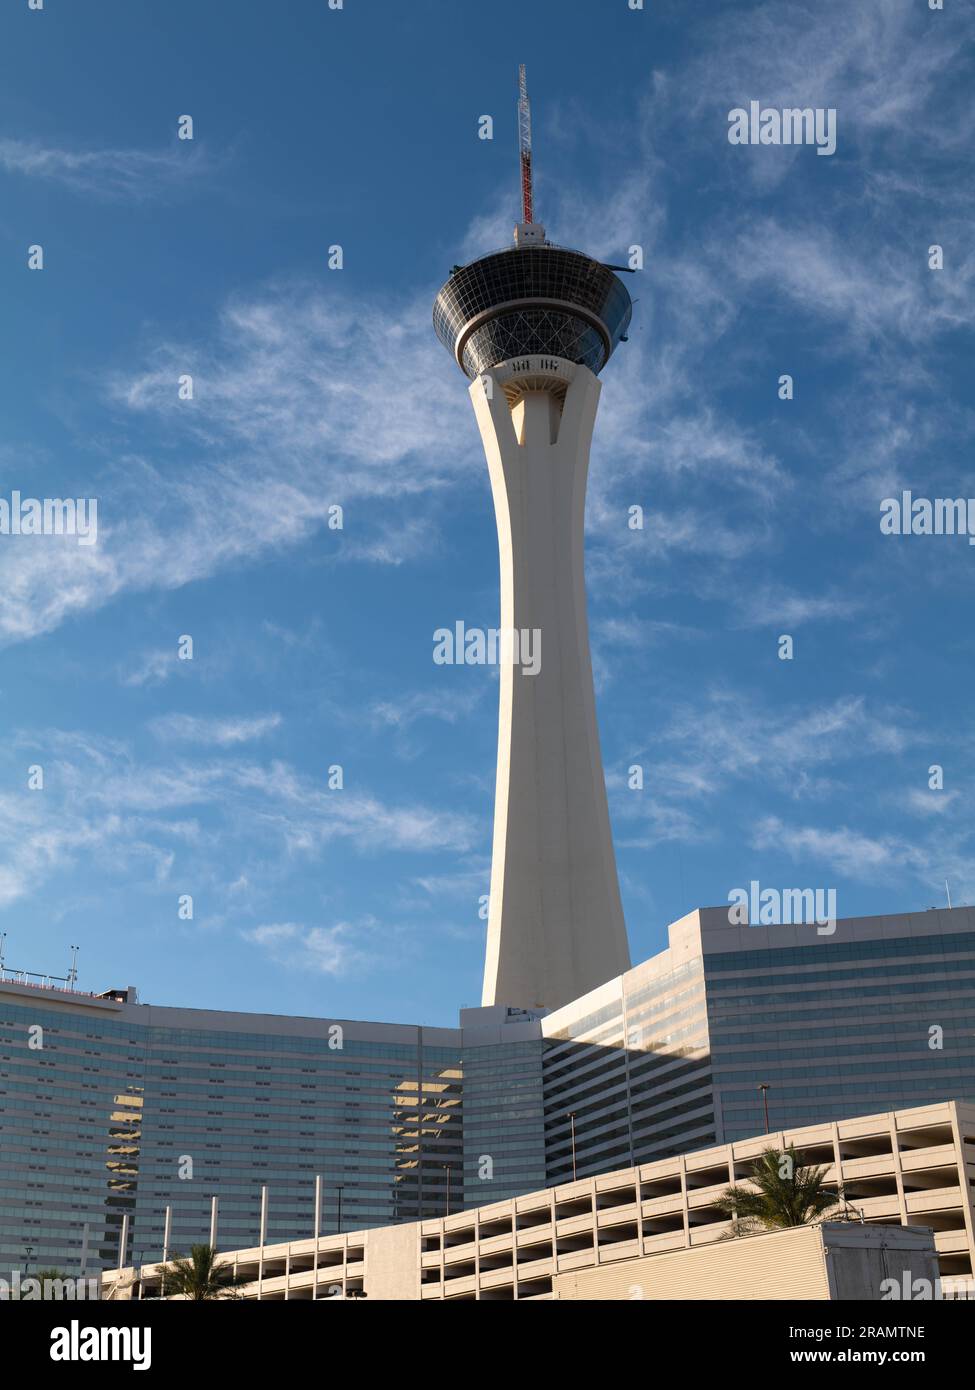 Big Shot - The STRAT Hotel, Casino & Tower - Las Vegas, NV